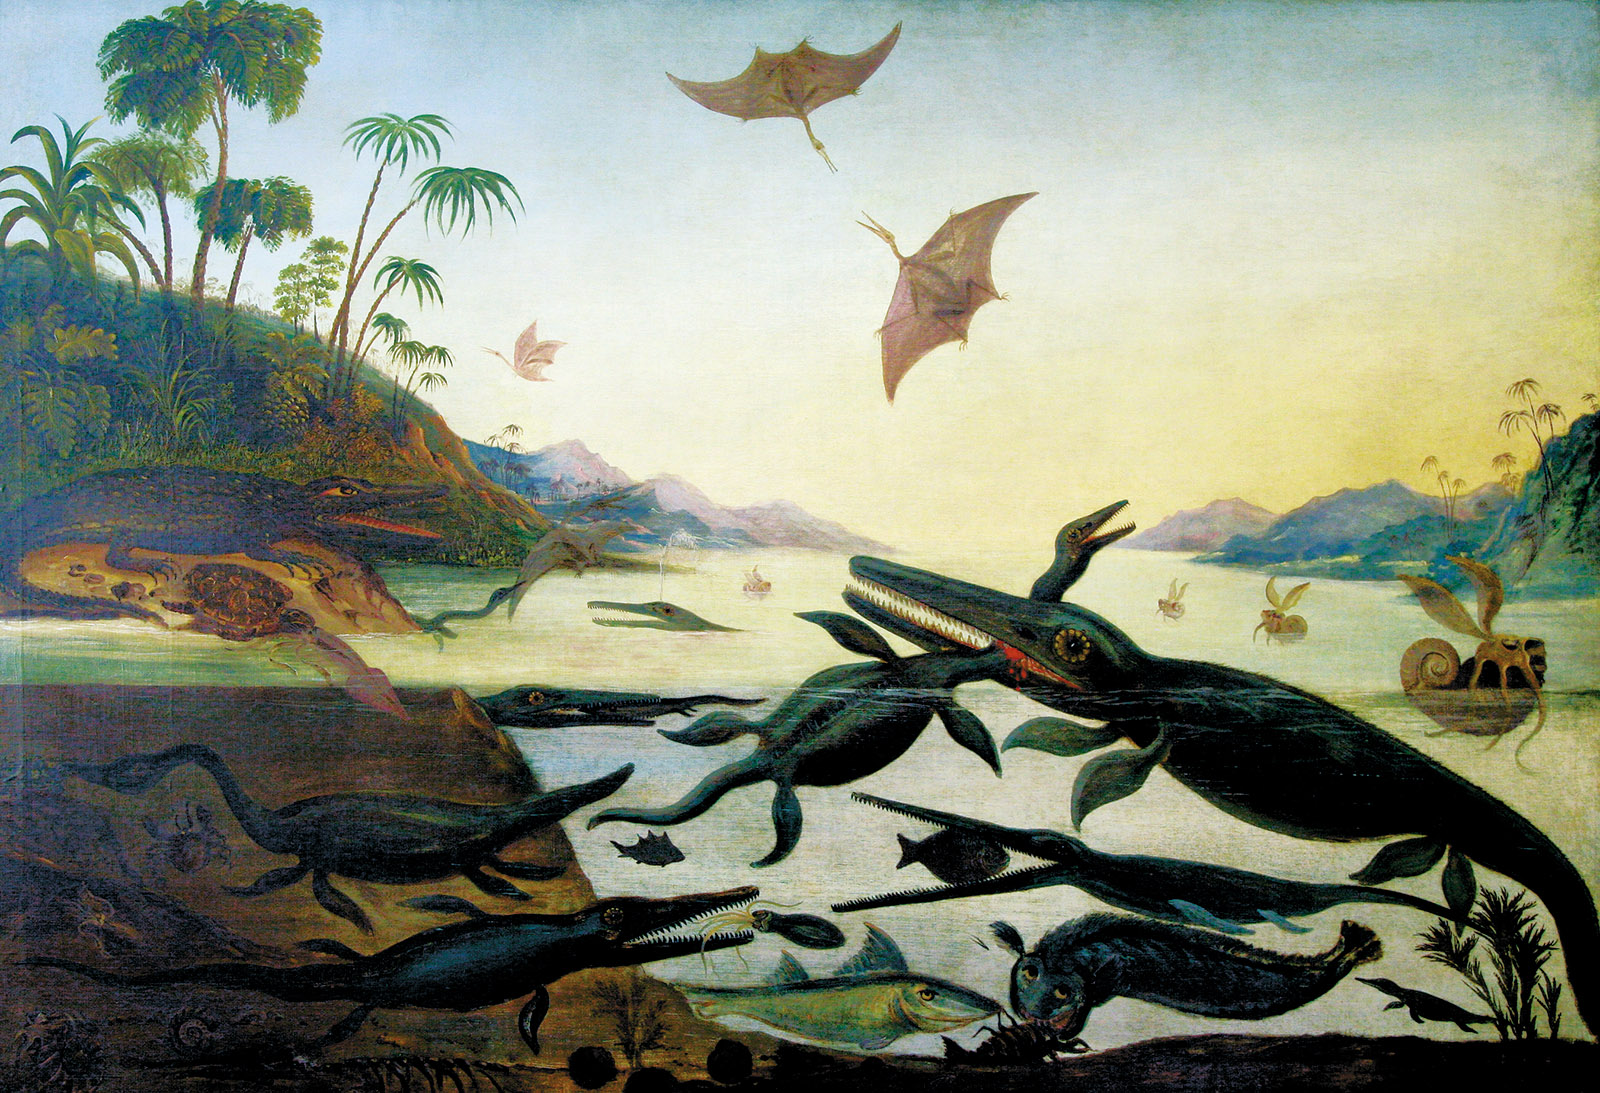 Robert Farren: Life in the Jurassic Sea ‘Duria Antiquior’ (An Earlier Dorset), circa 1850